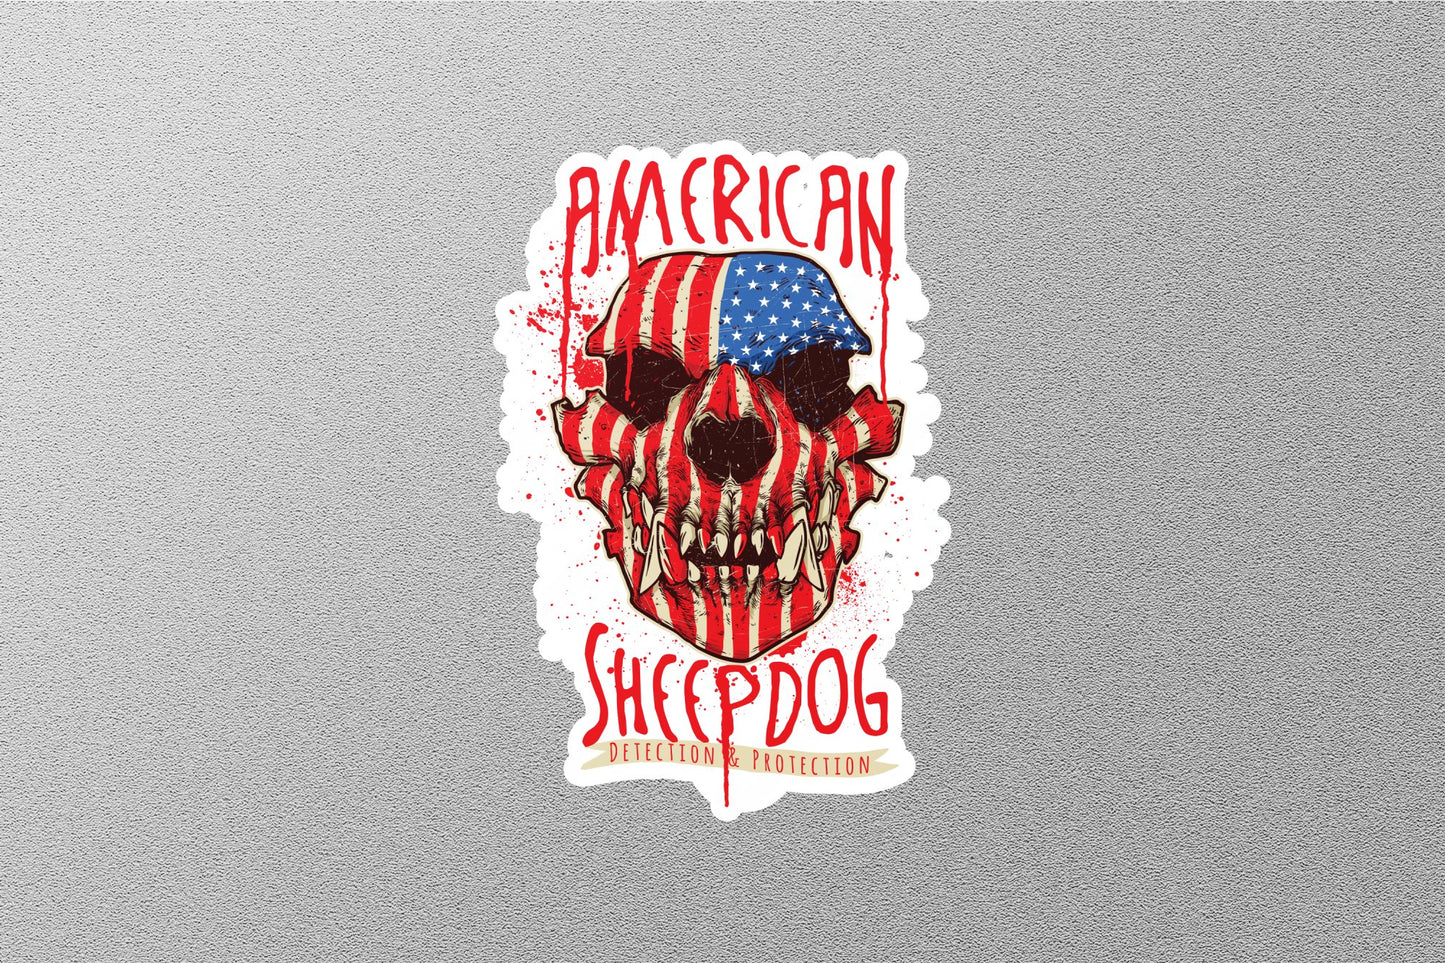 American Sheep Dog Sticker